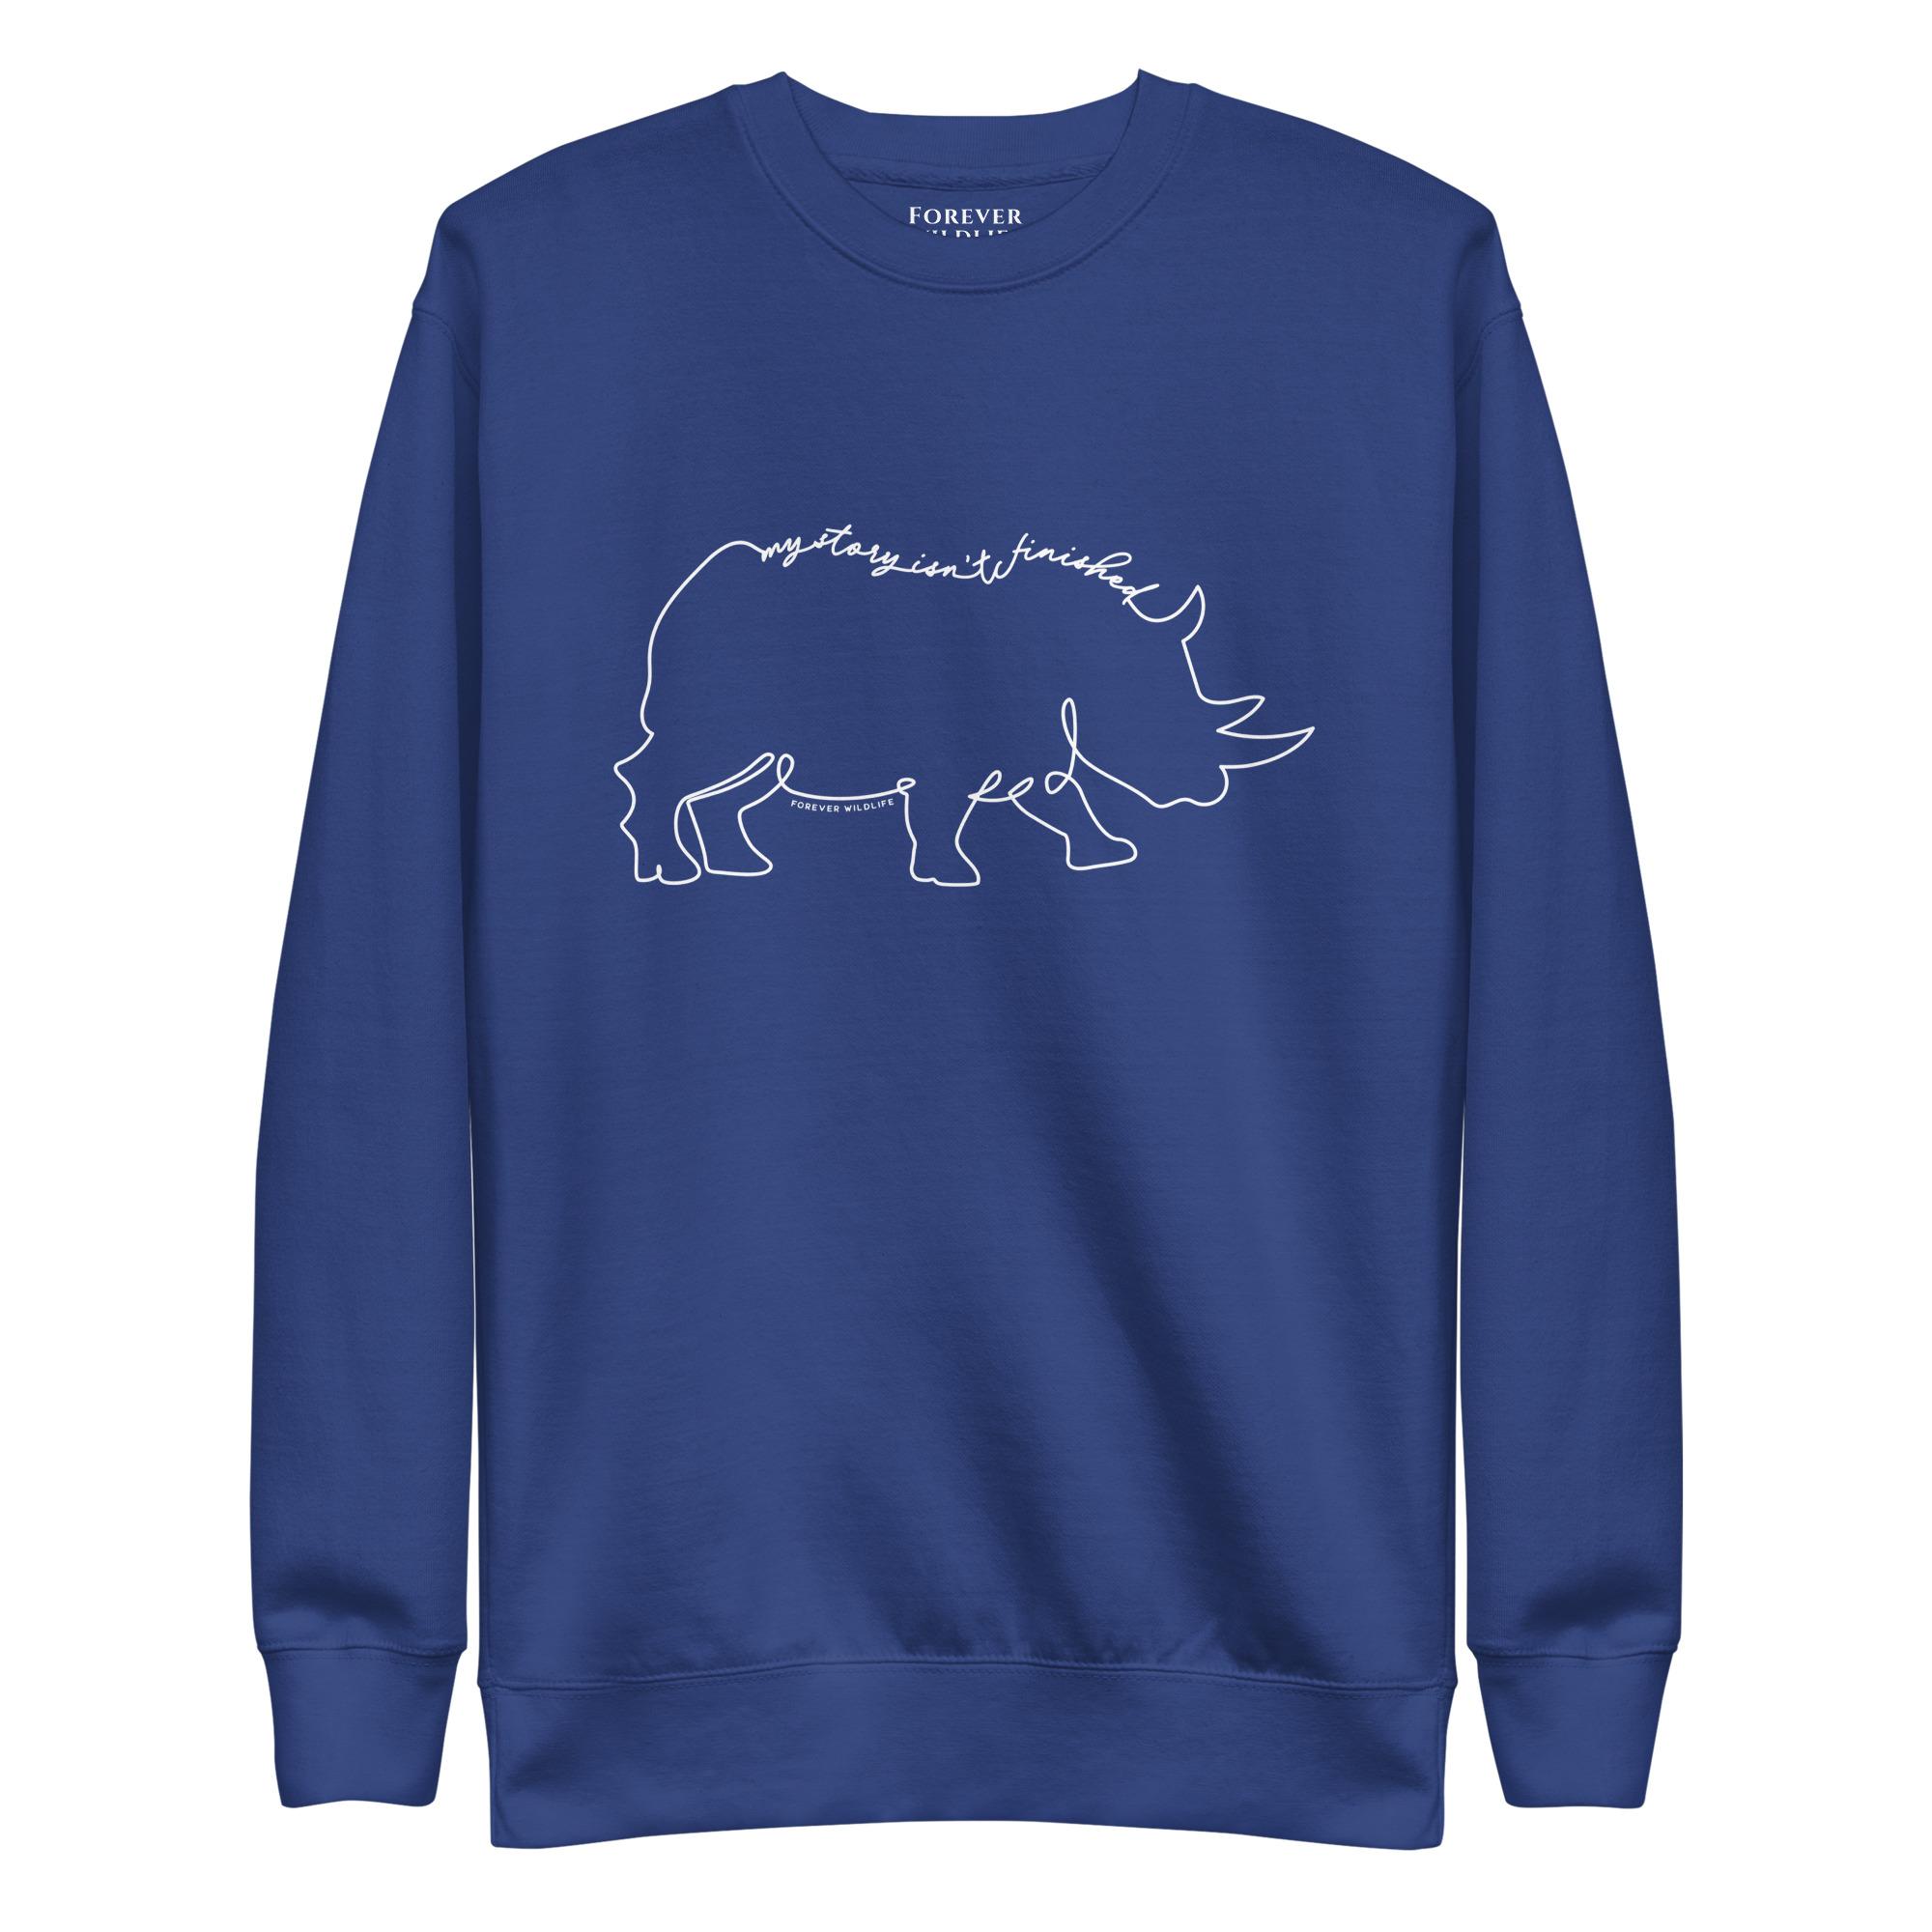 Rhino Sweatshirt in Royal-Premium Wildlife Animal Inspiration Sweatshirt Design with 'My Story Isn't Finished' text, part of Wildlife Sweatshirts & Clothing from Forever Wildlife.